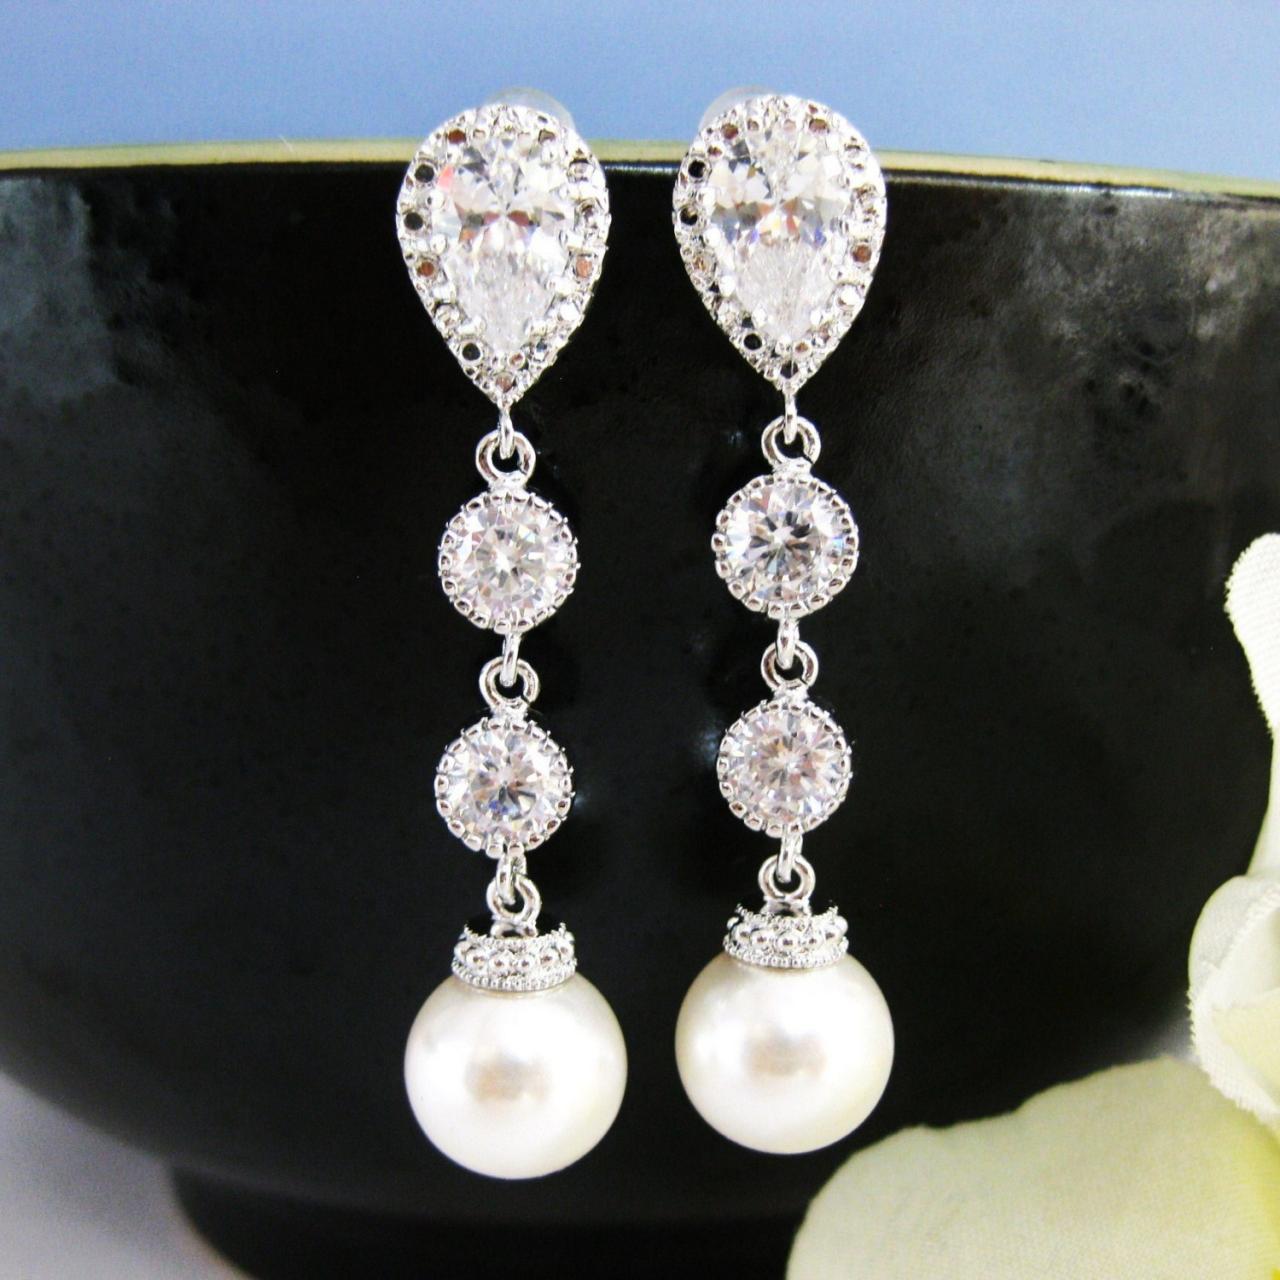 Bridal Pearl Earrings Swarovski 10mm Round Pearl Wedding Jewelry Pearl Dangle Earrings Bridesmaid Gift Cubic Zirconia Earrings (e039)